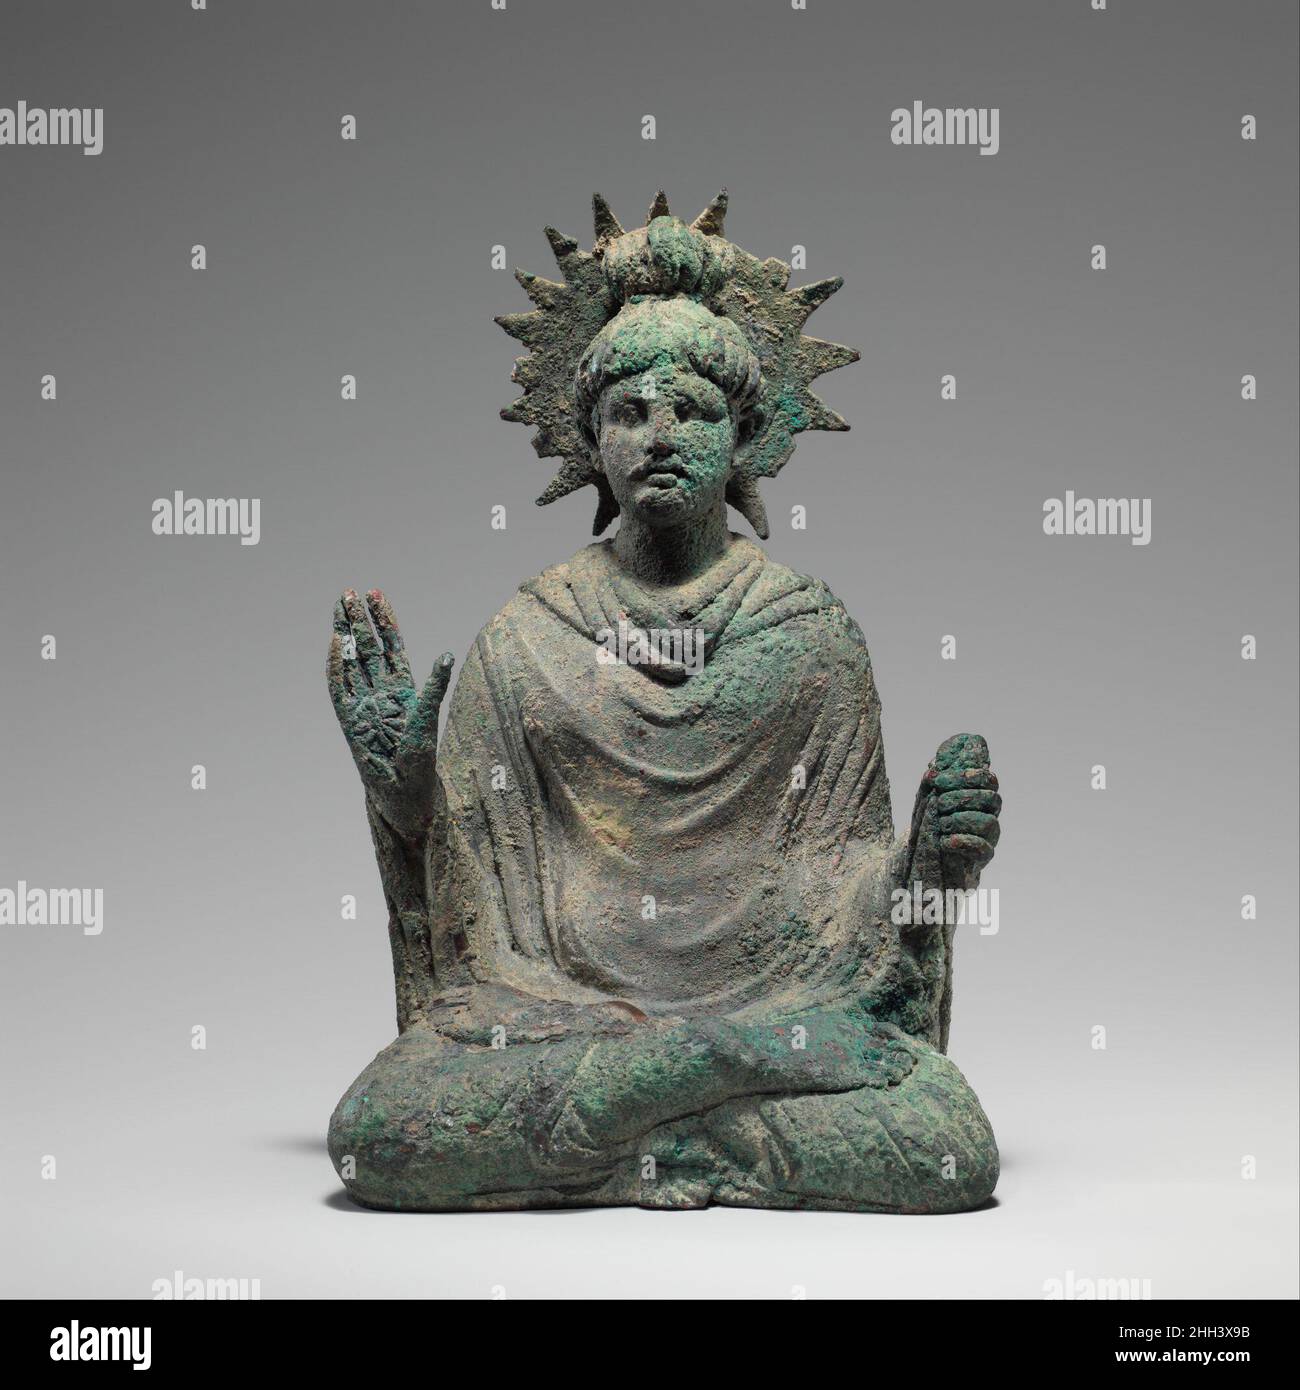 Image of Statue of BuddhaZR412547Picxy